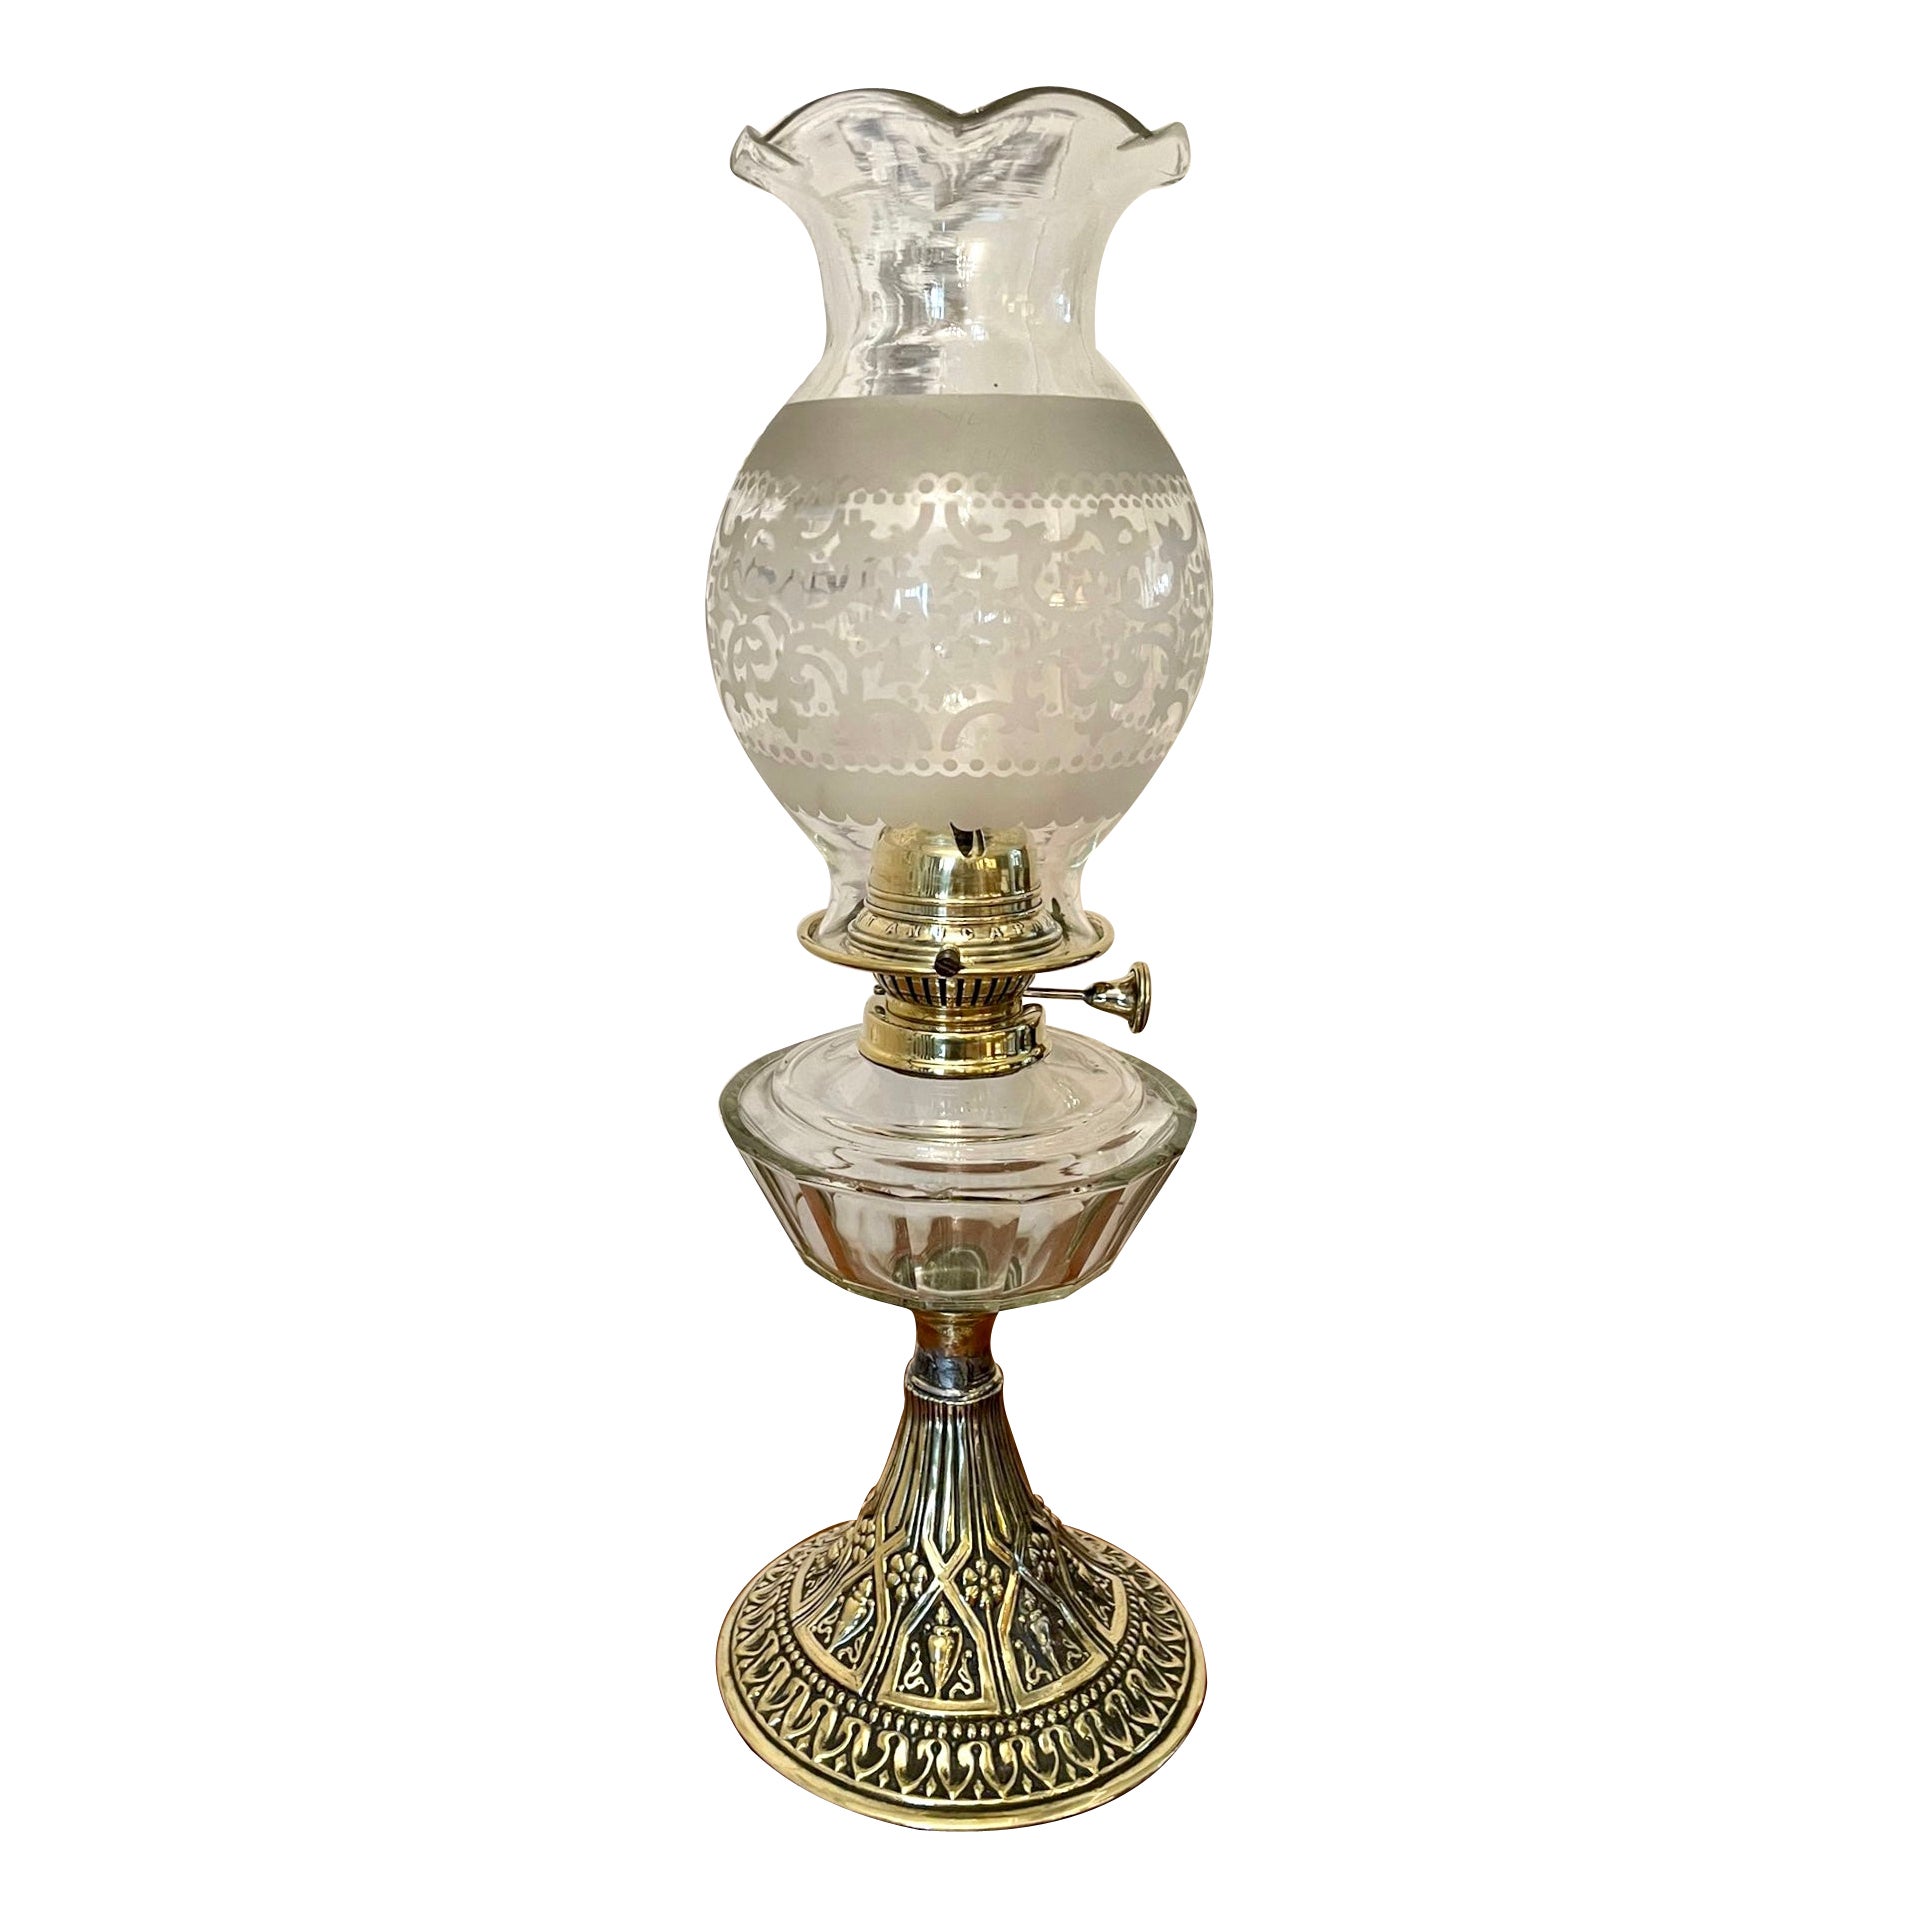 Unusual Antique Victorian Chimneyless Ornate Oil Lamp